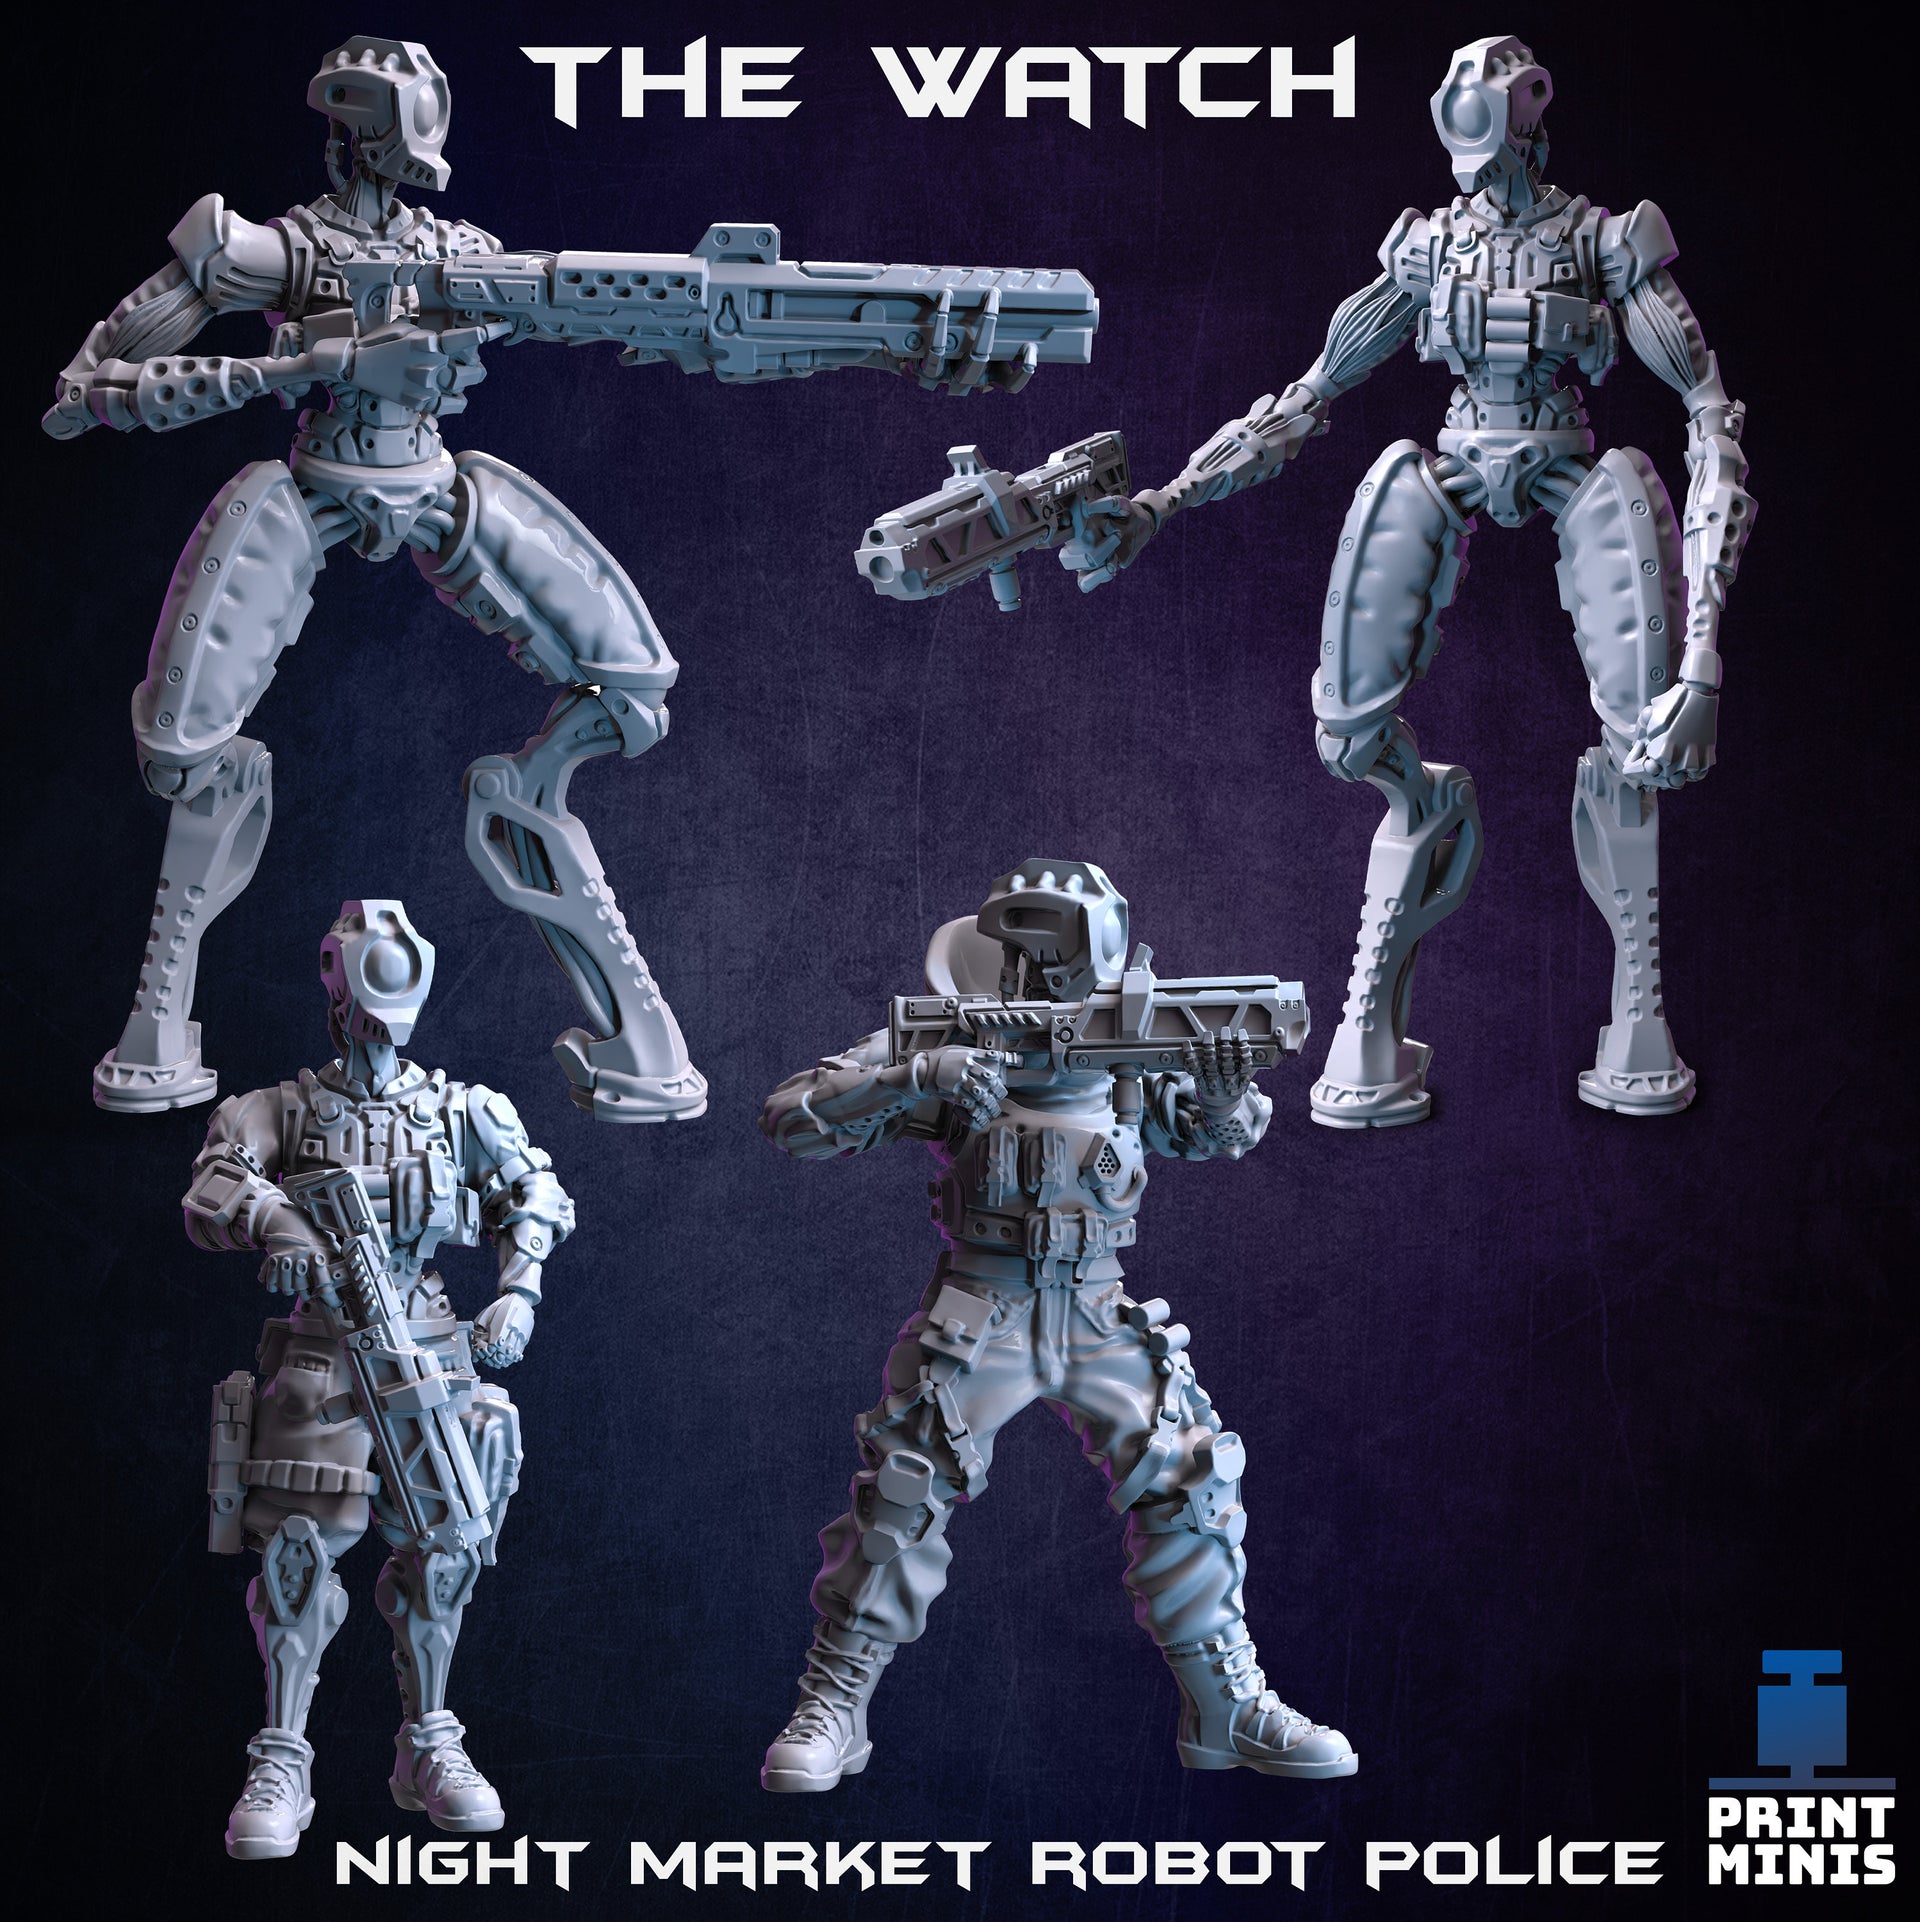 The Watch,  Modular Night Market  Police - Print Minis 